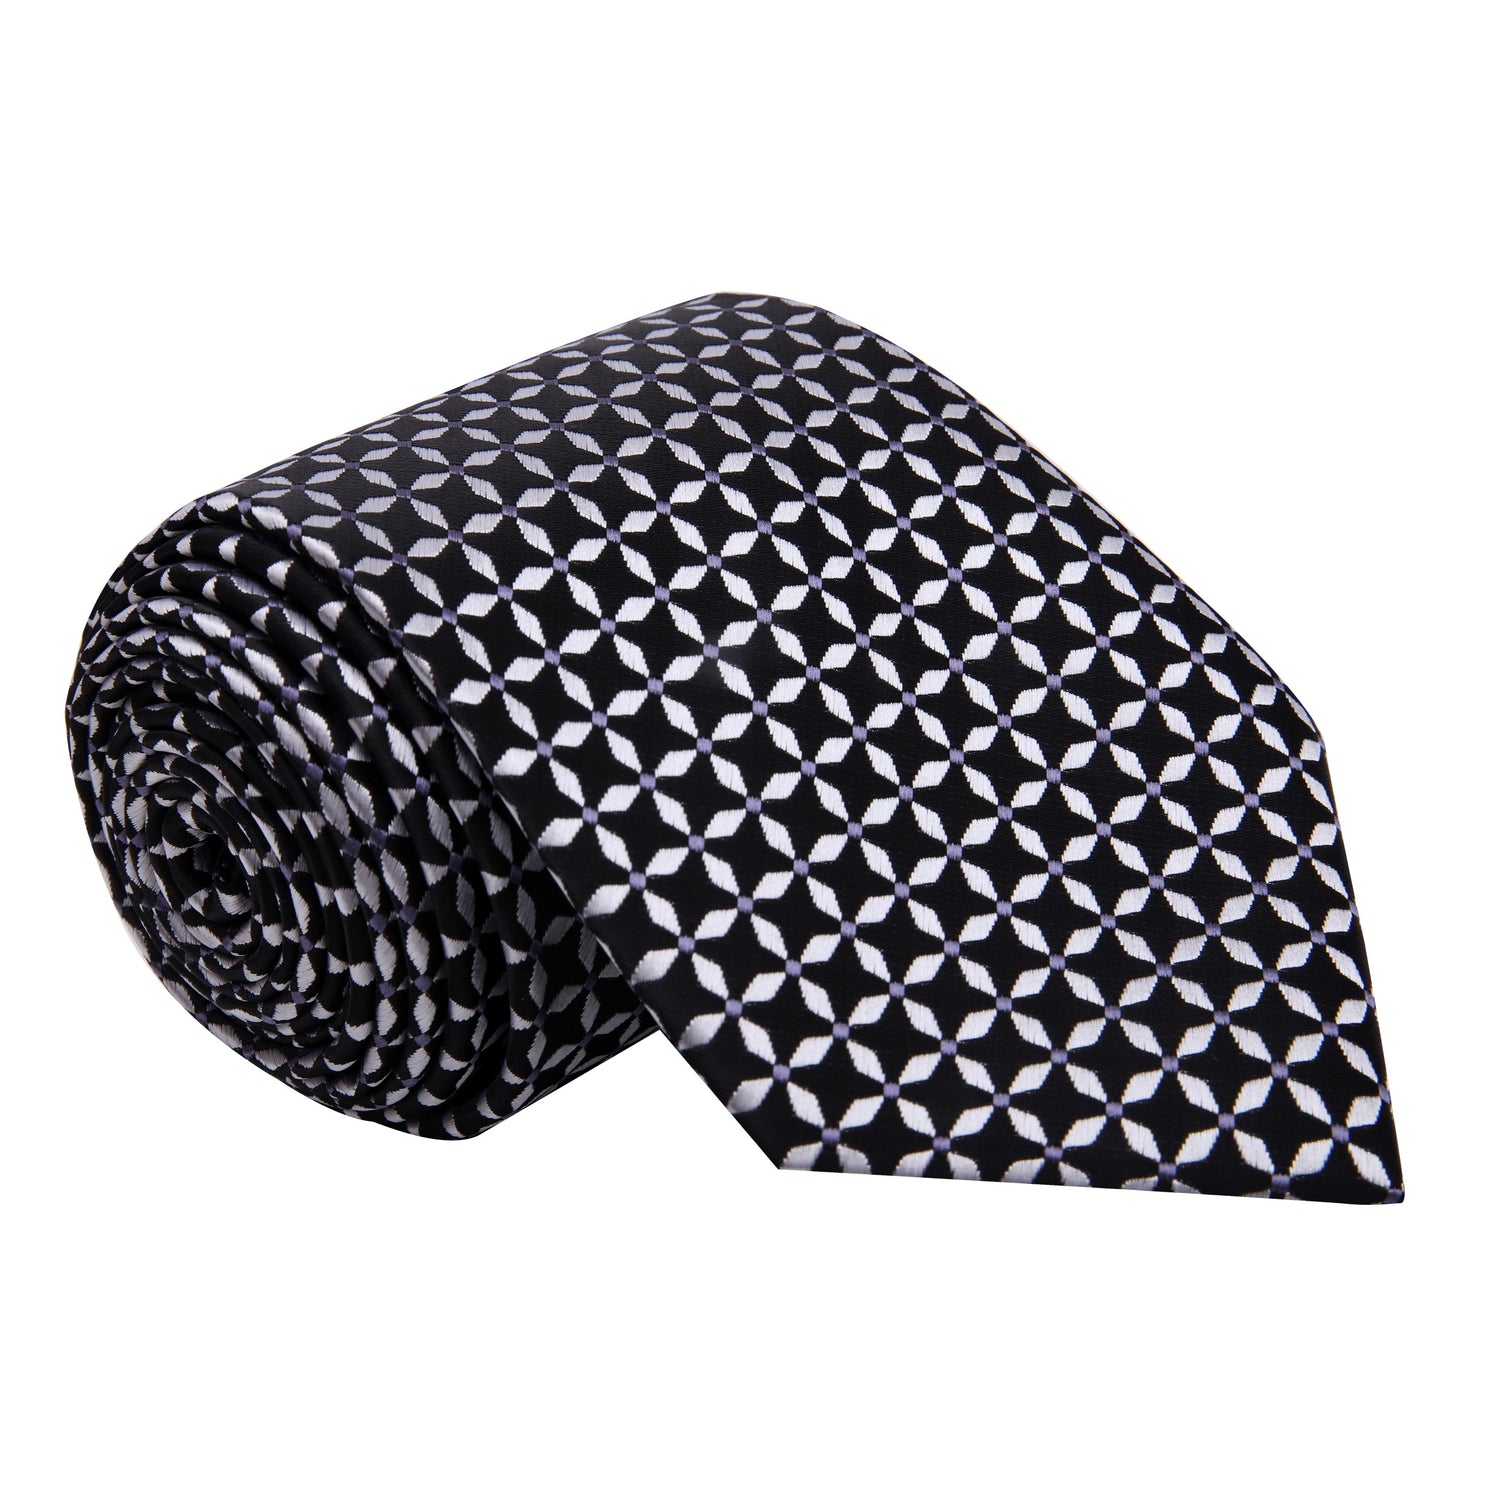 A Black With Grey Geometric X Pattern Silk Necktie, Dark Grey, Black Tie 